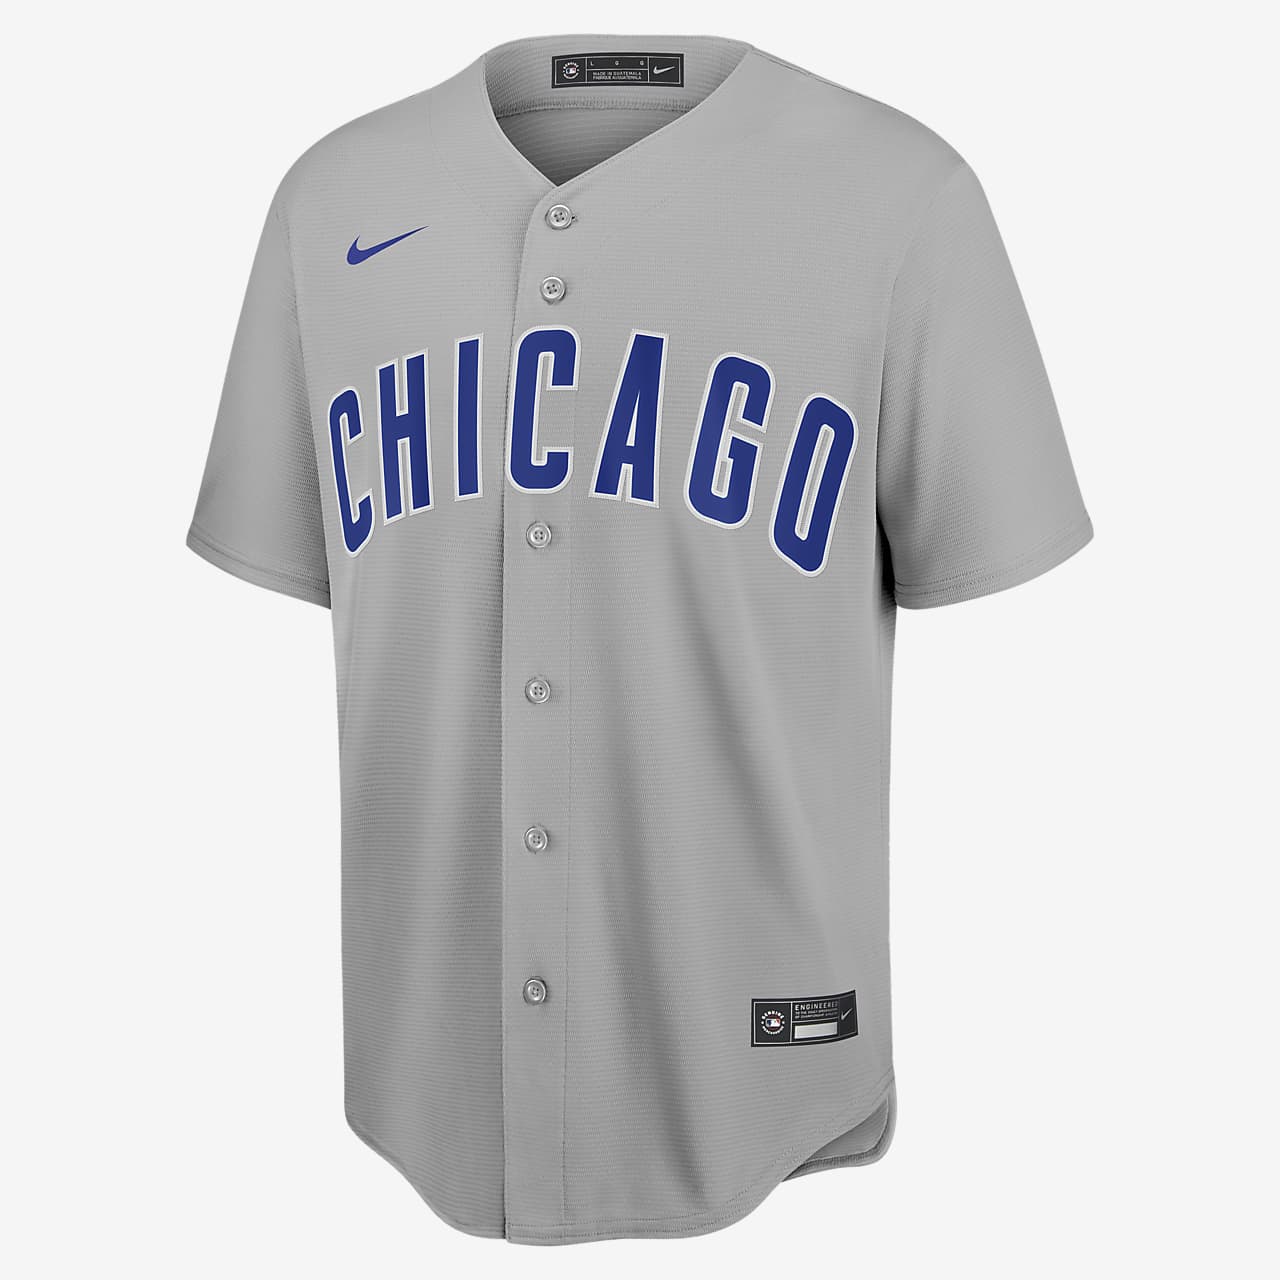 grey baseball uniforms